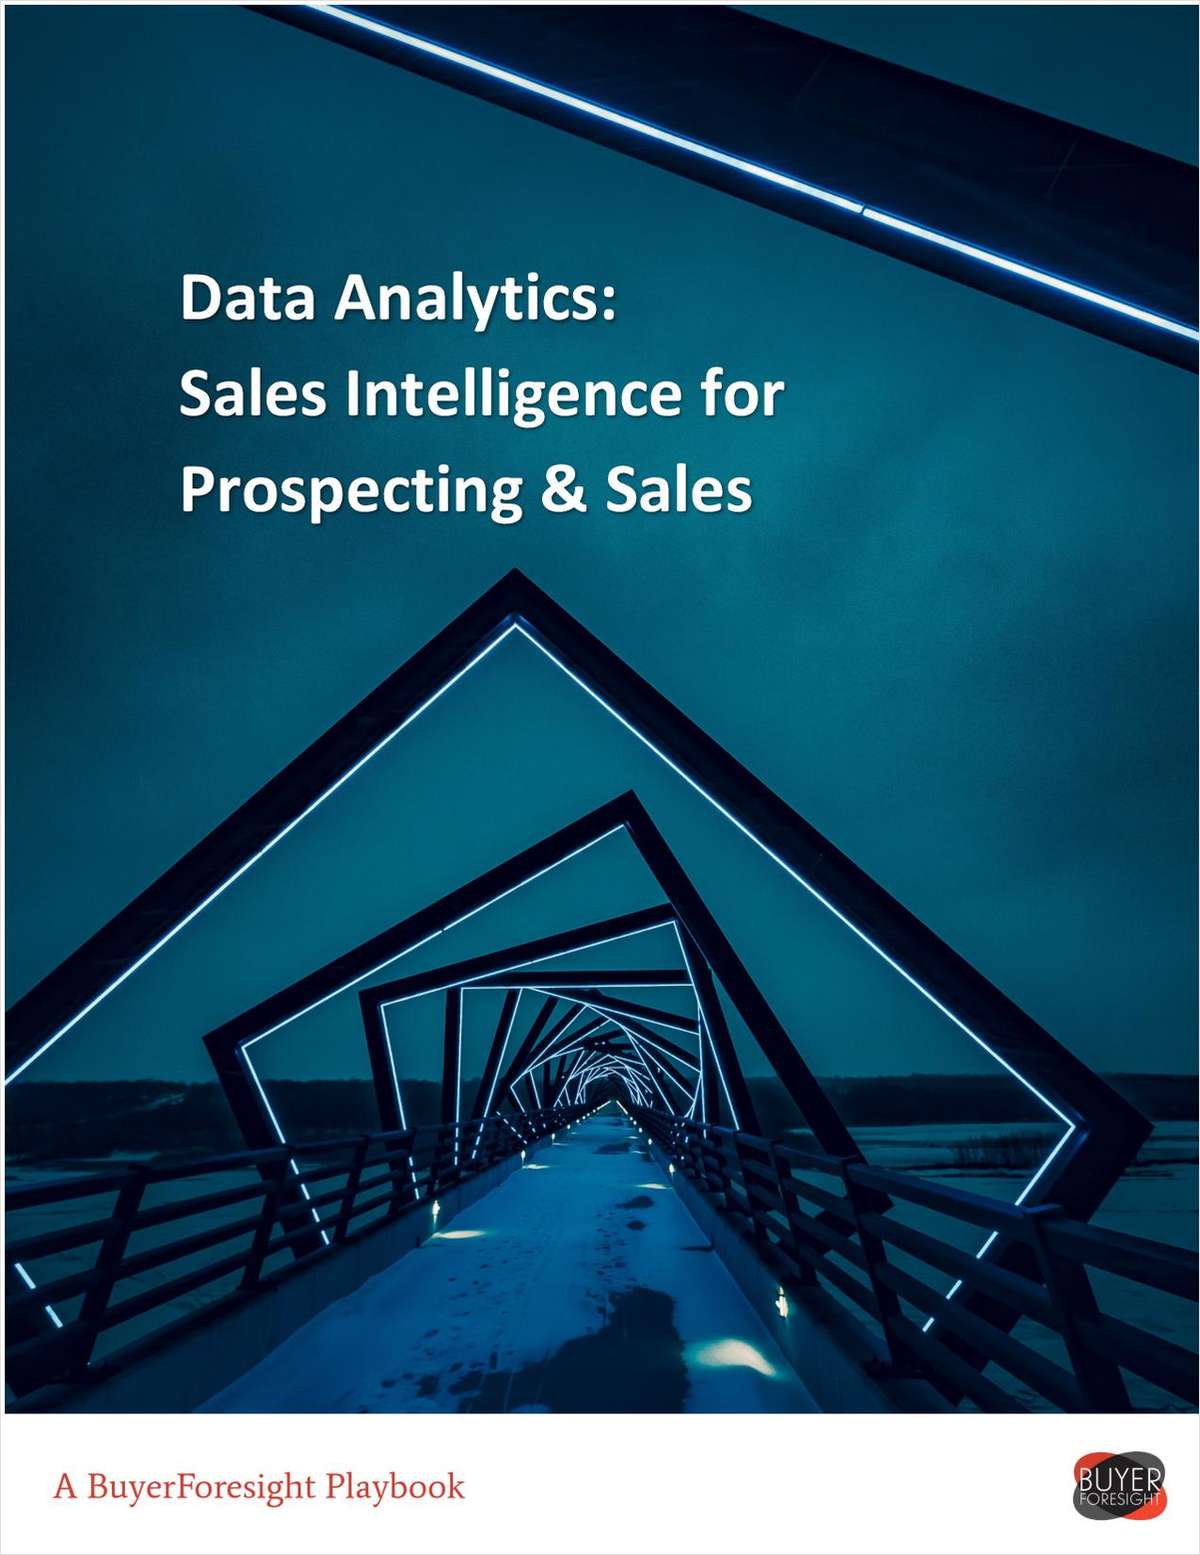 Sales Intelligence playbook for Data Analytics companies